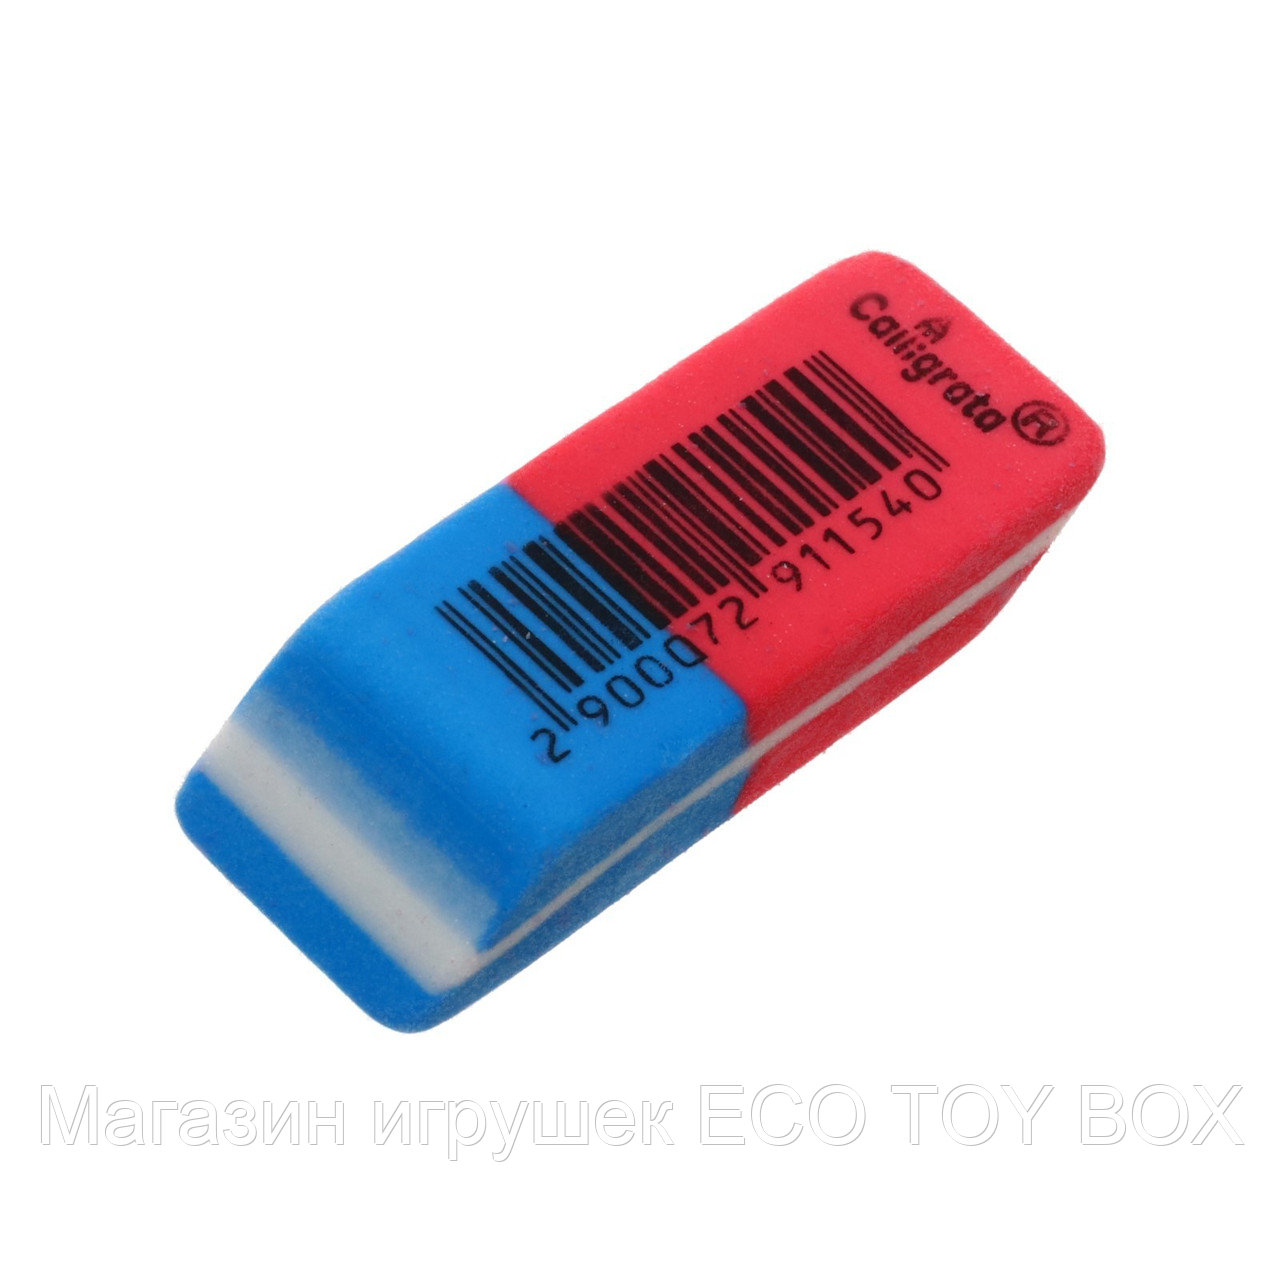 Ластик комбинированный красно-синий скошенный 39 х 15 х 6 мм